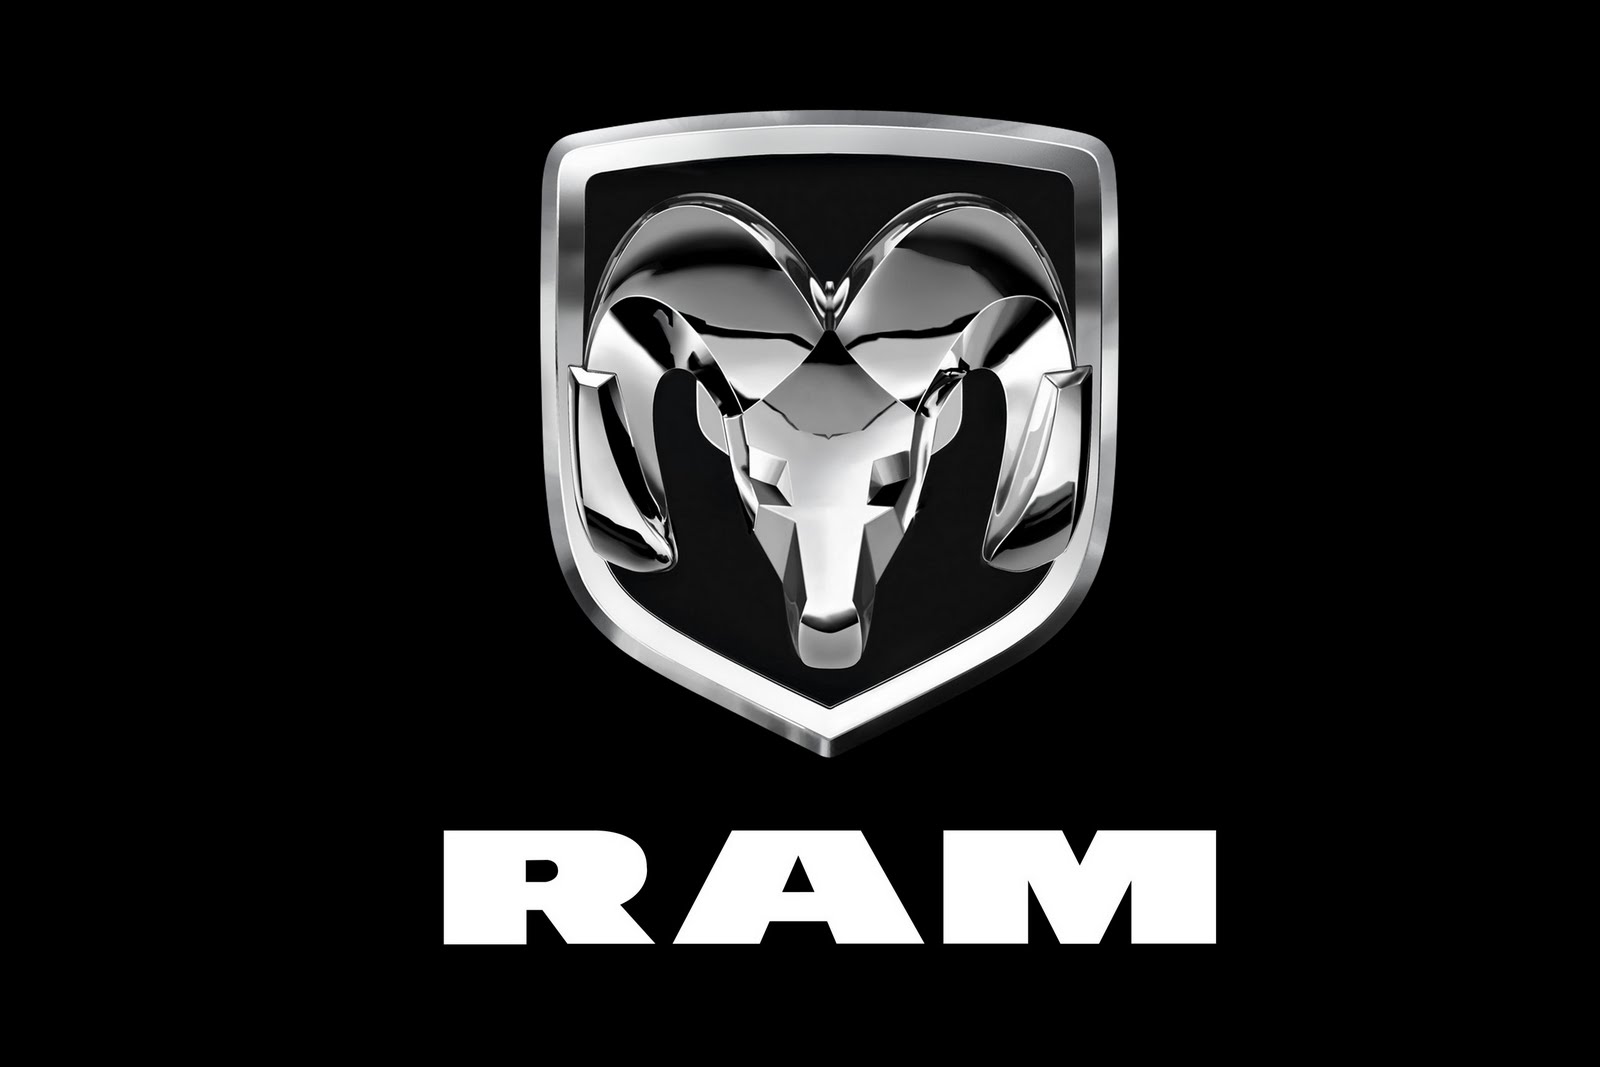 Dodge Ram Logo Wallpaper 5152 Hd Wallpapers in Logos   Imagescicom